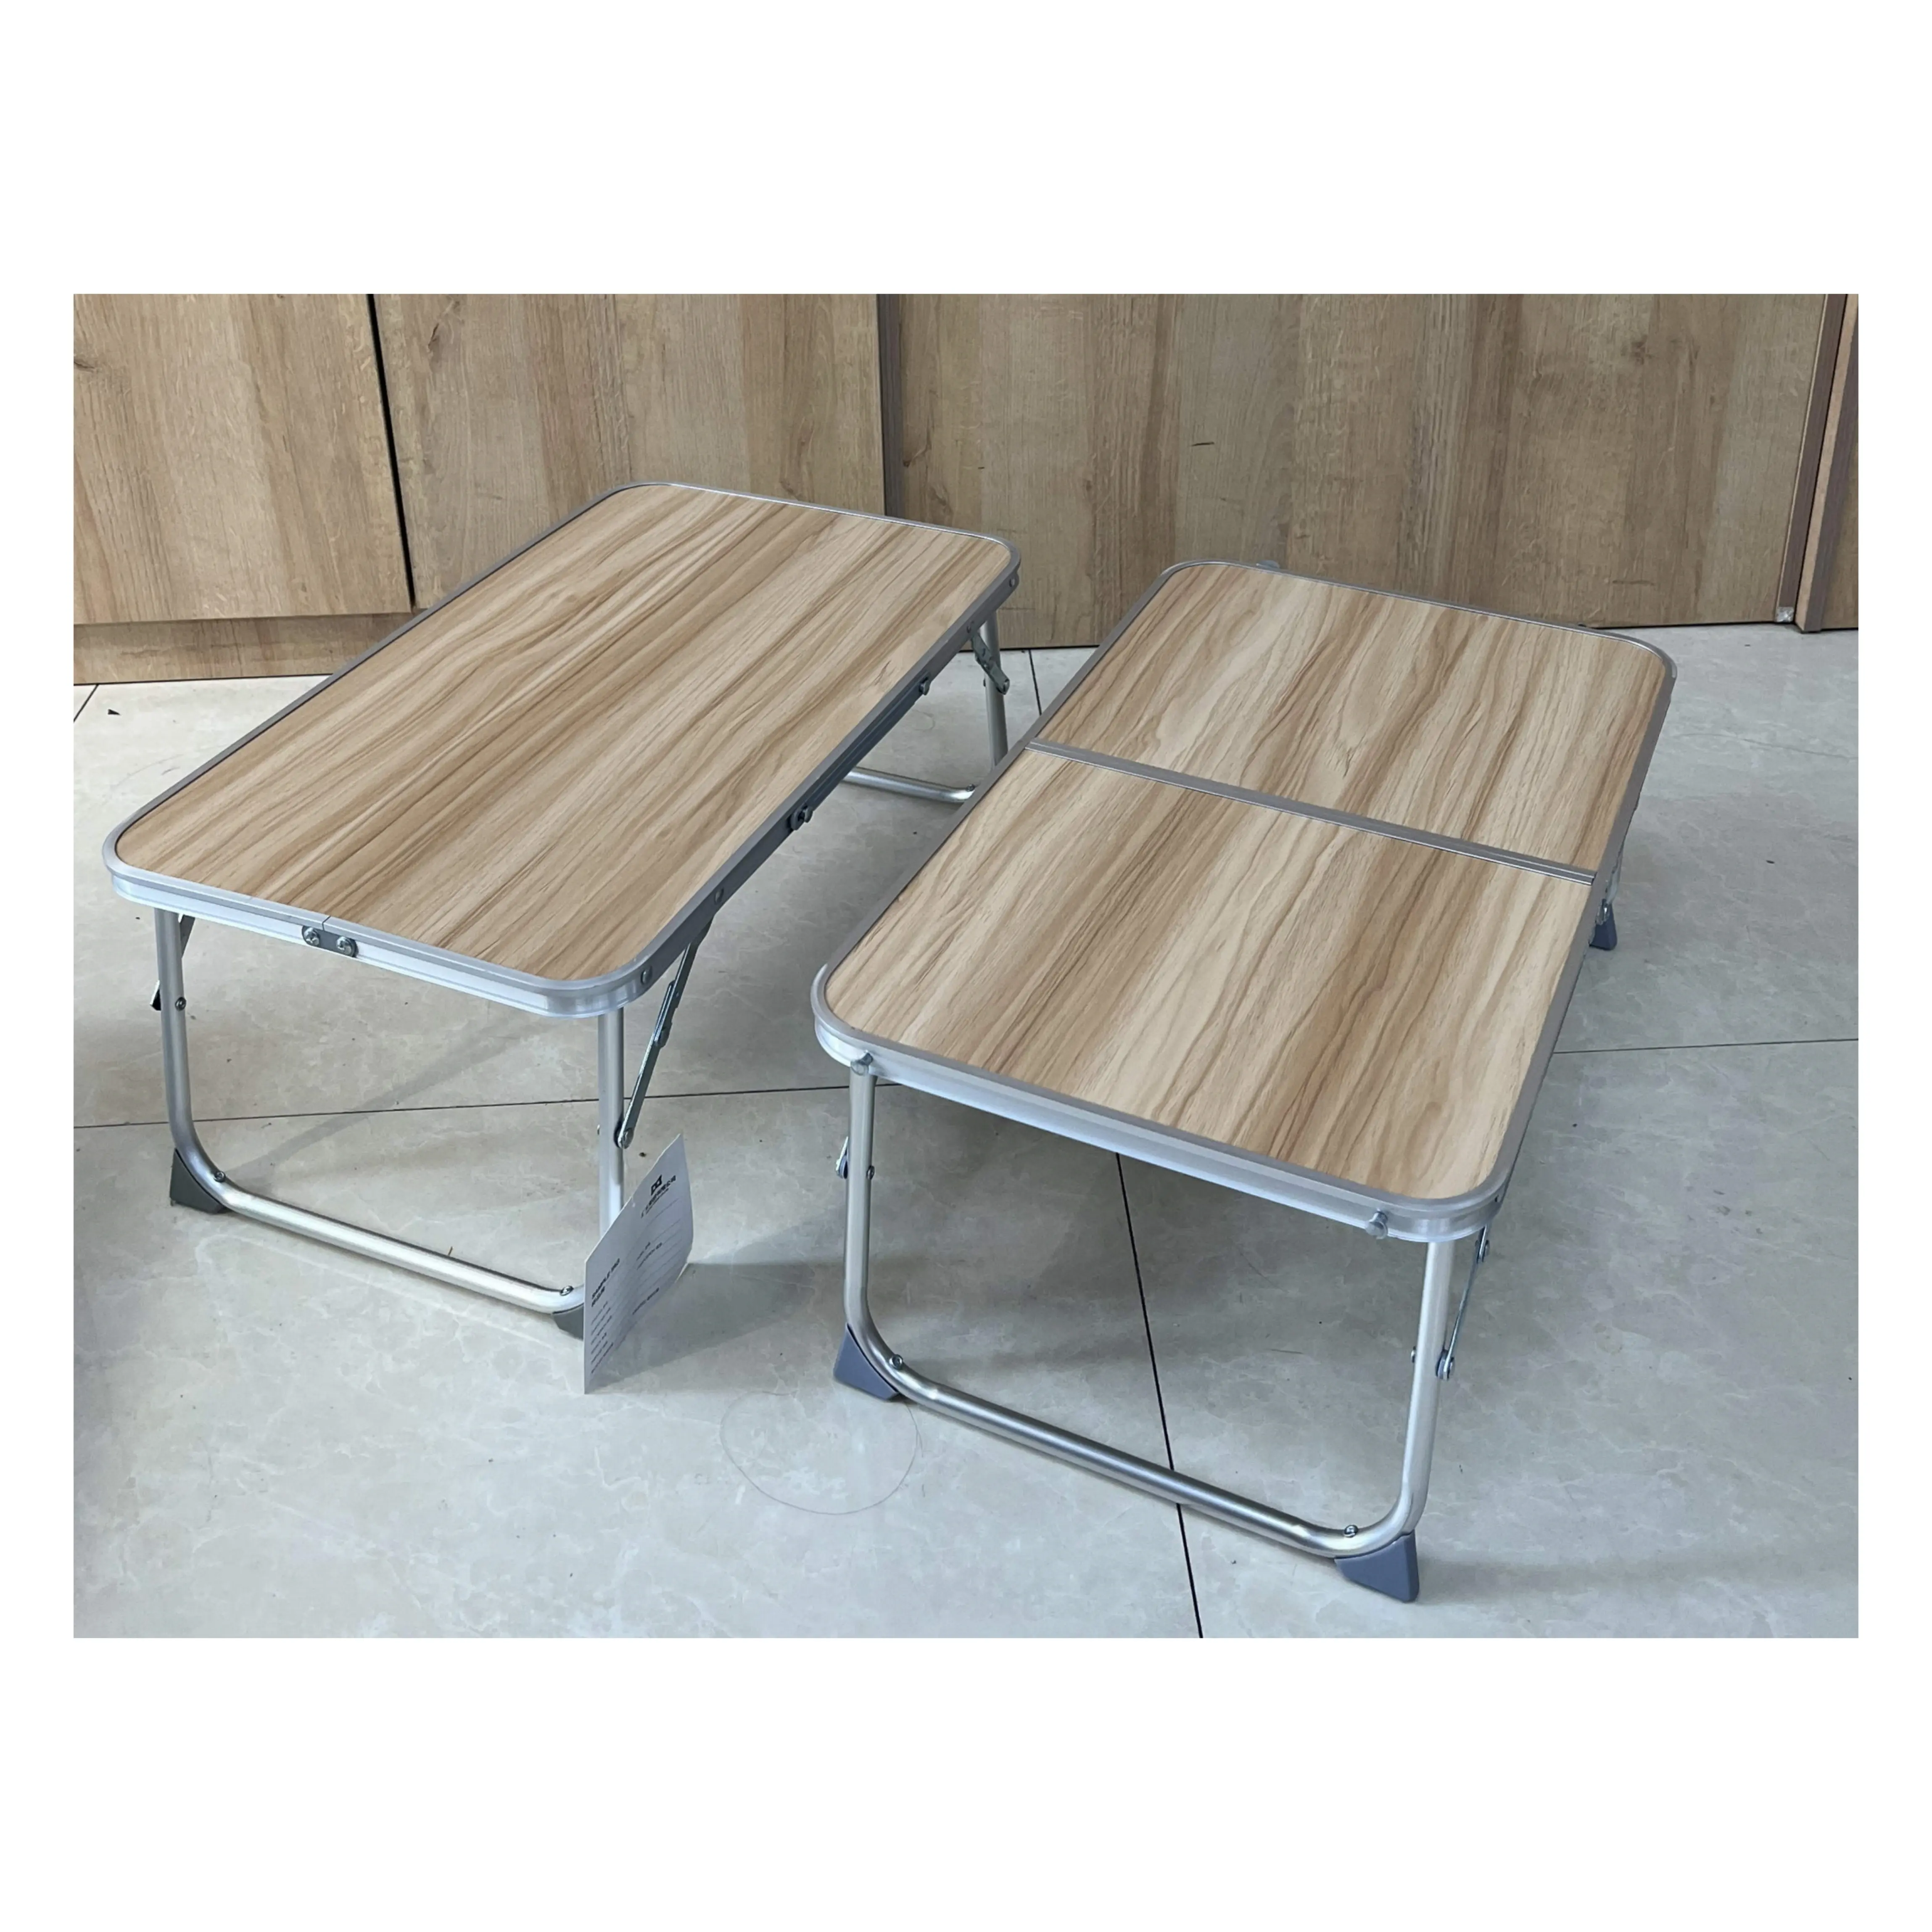 Meja kerja Laptop lipat, meja piknik kecil bahan Aloi aluminium, meja kerja portabel untuk Laptop